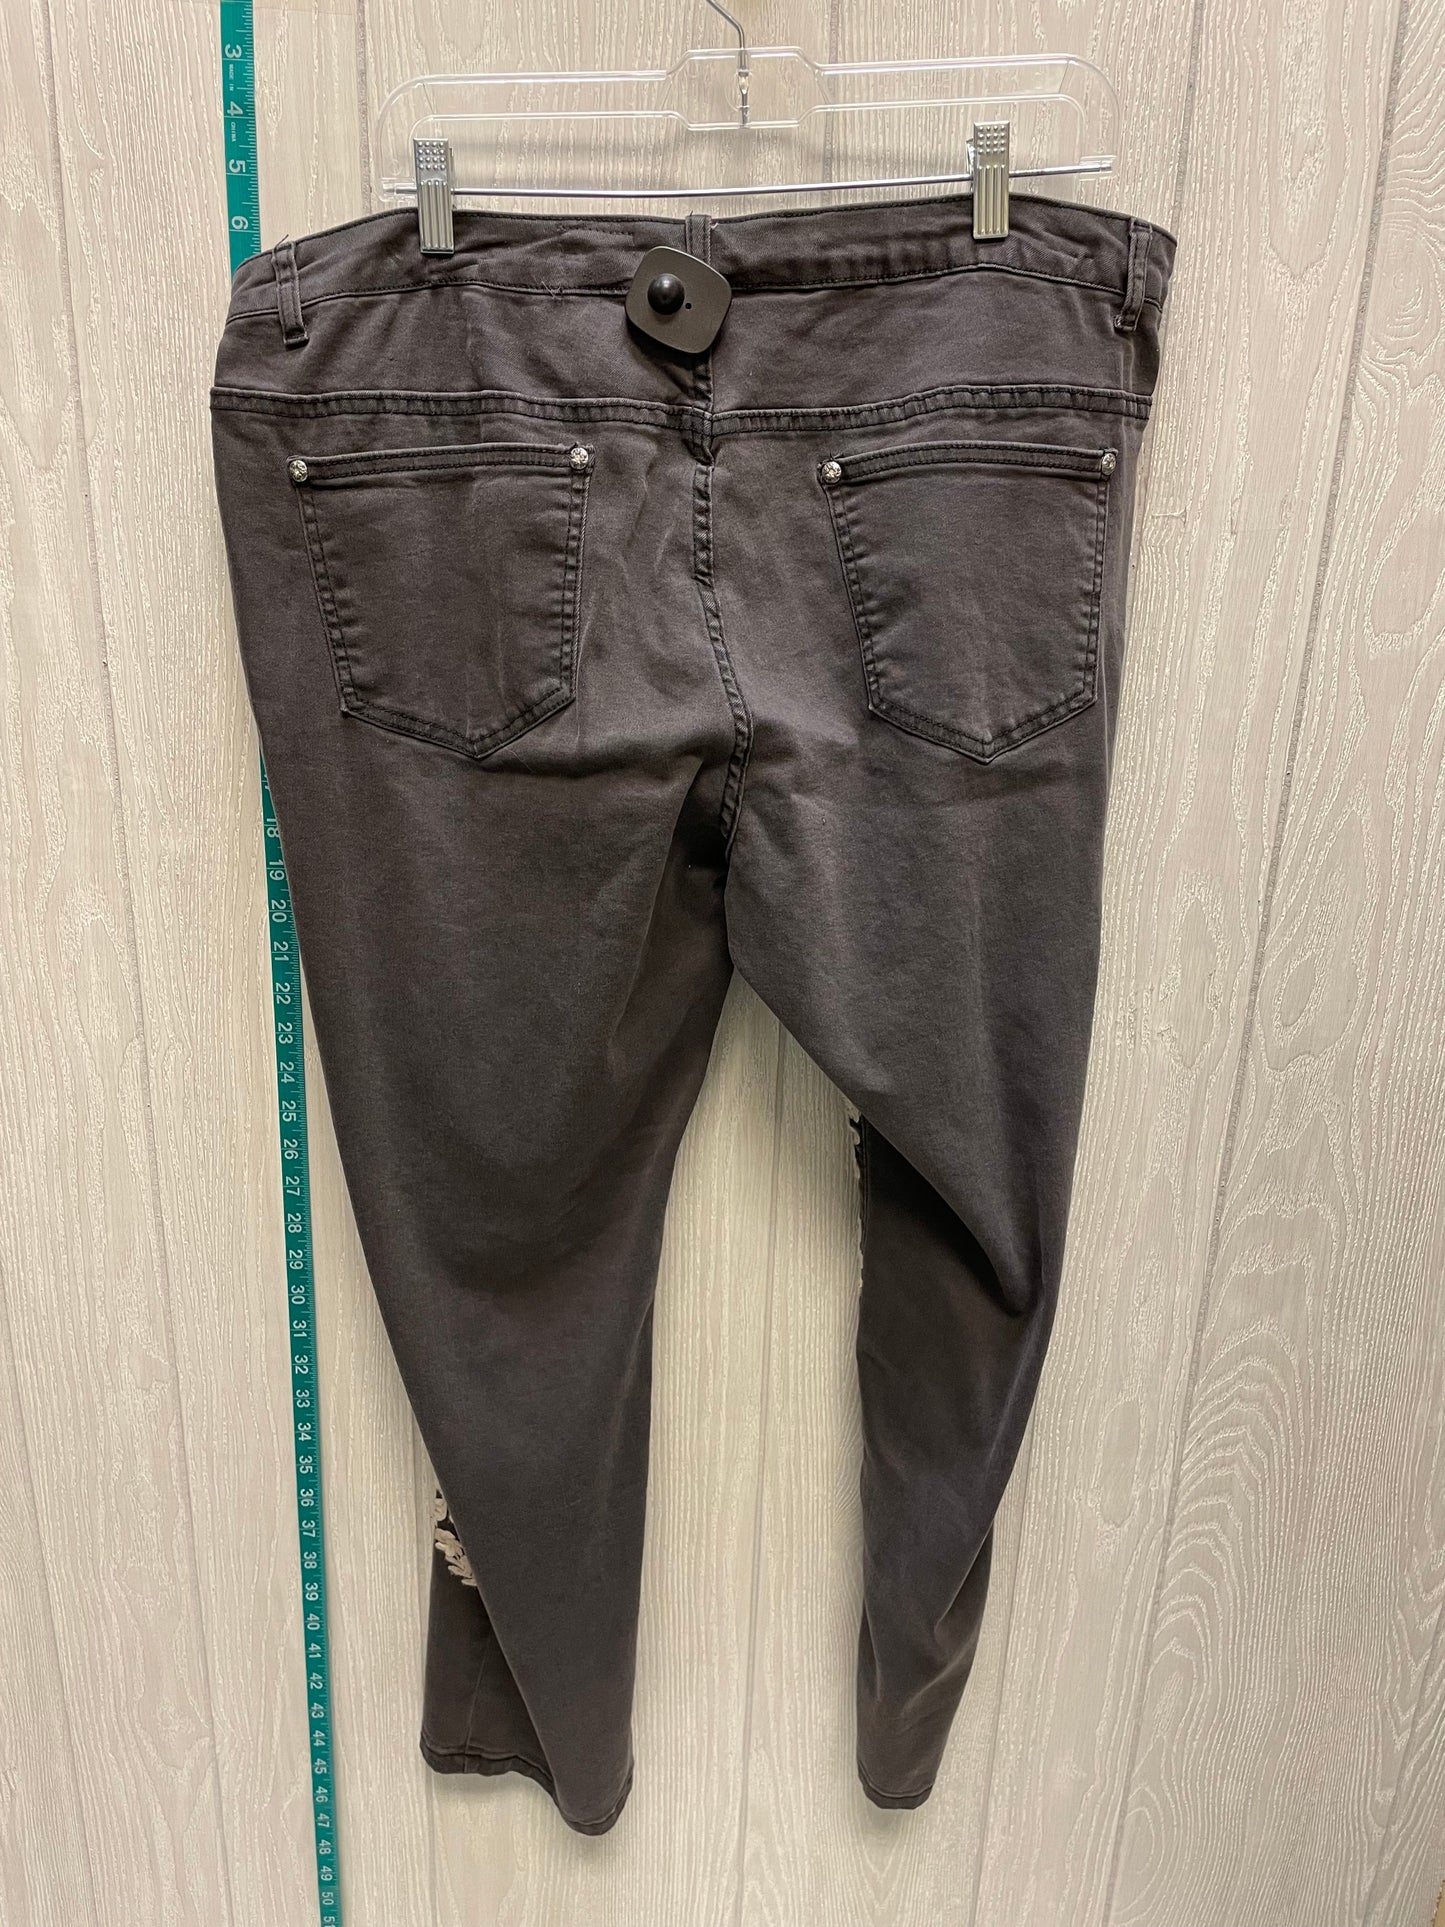 Grey Denim Jeans Straight Cristina, Size 16l